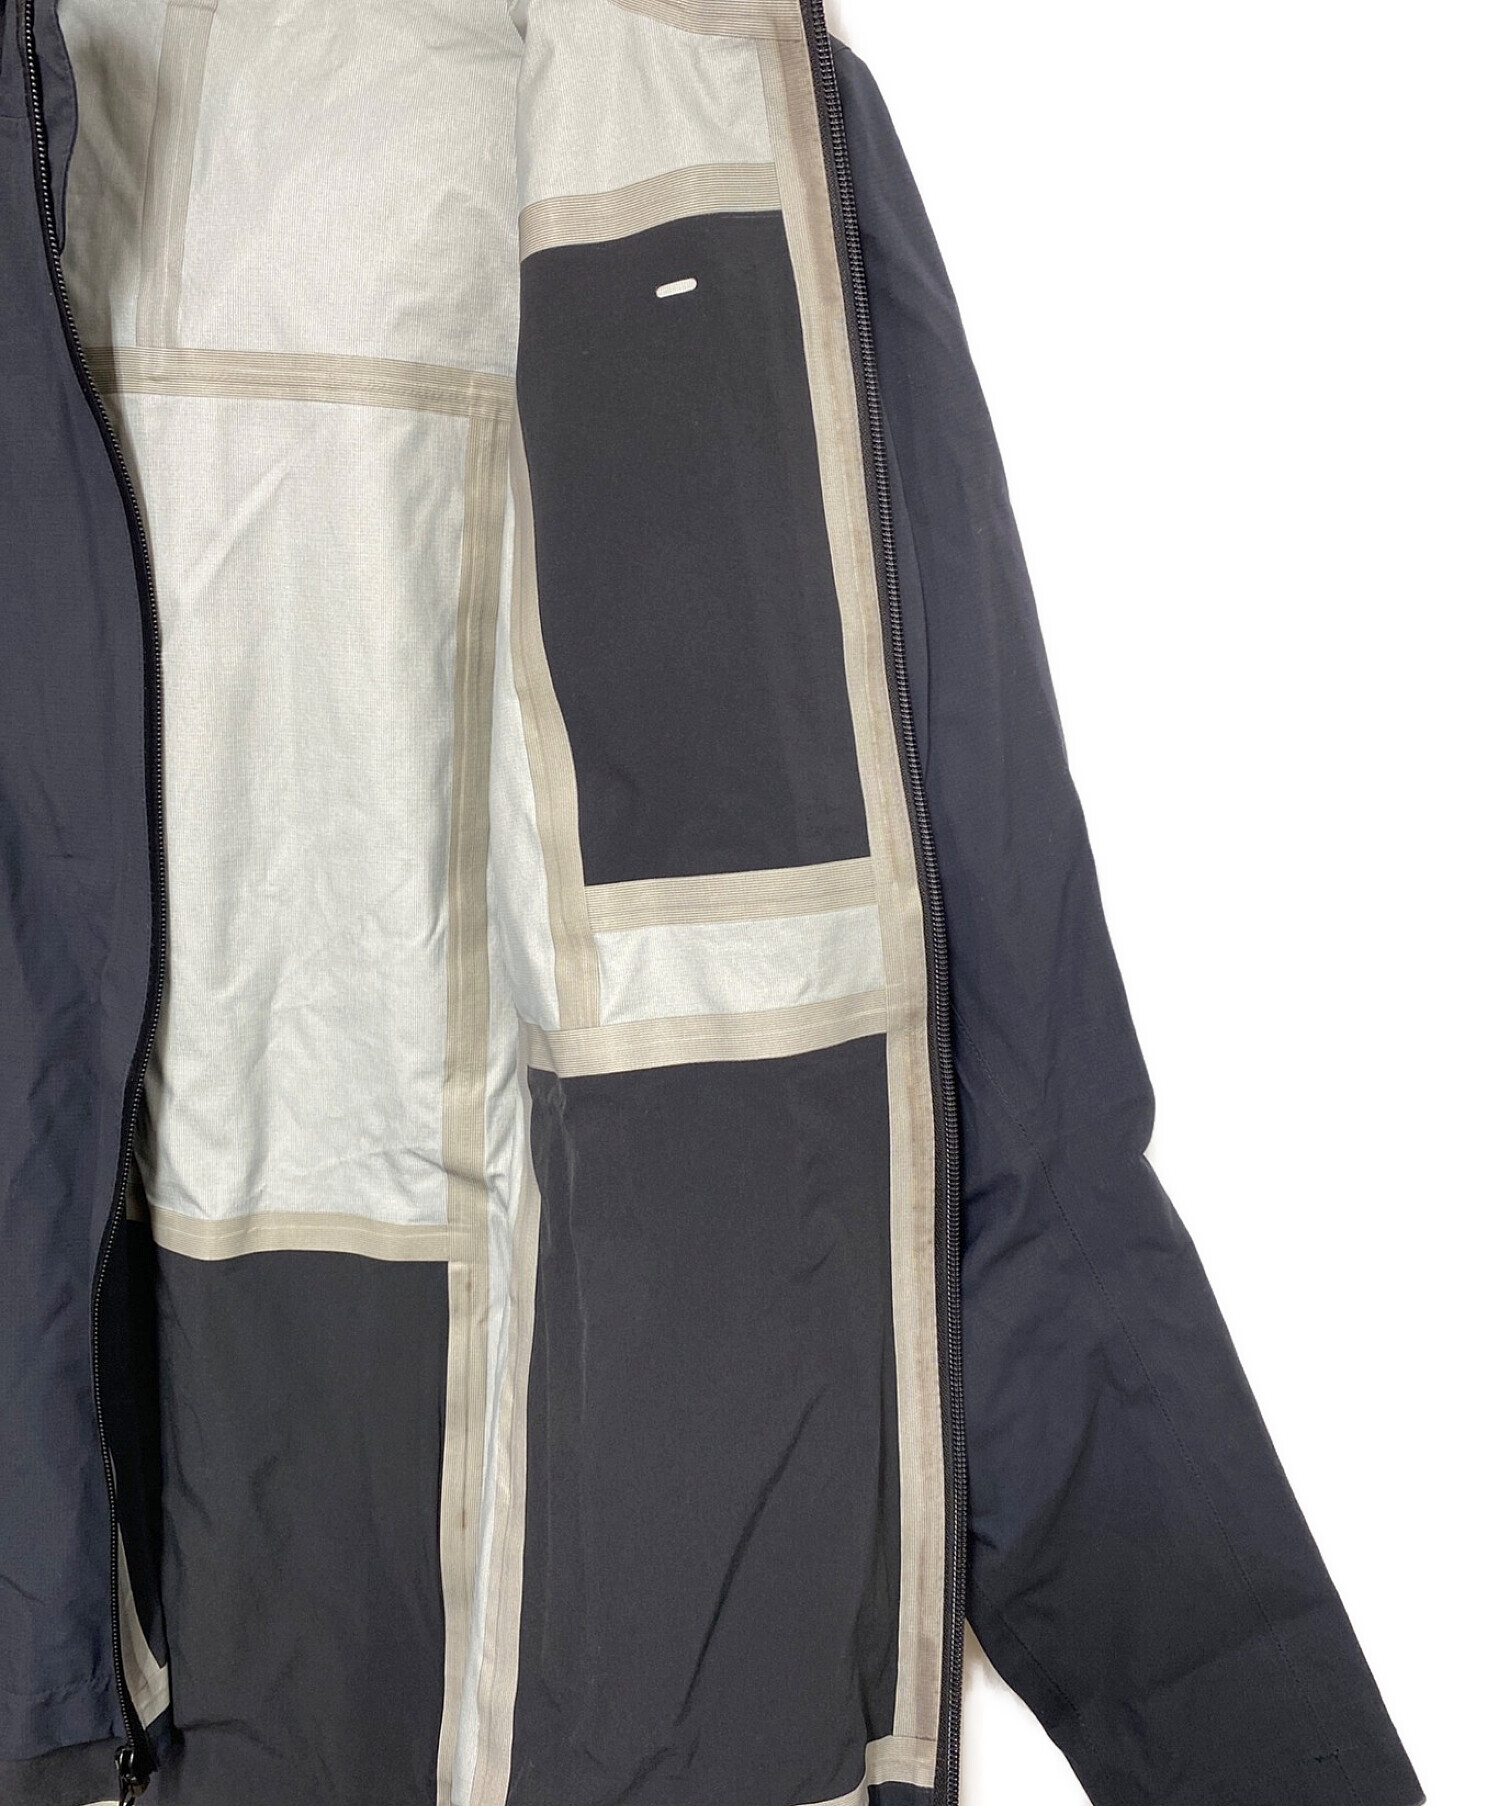 MISSION WORKSHOP (ミッションワークショップ) ウォータープルーフジャケット ブラック サイズ:SIZE M